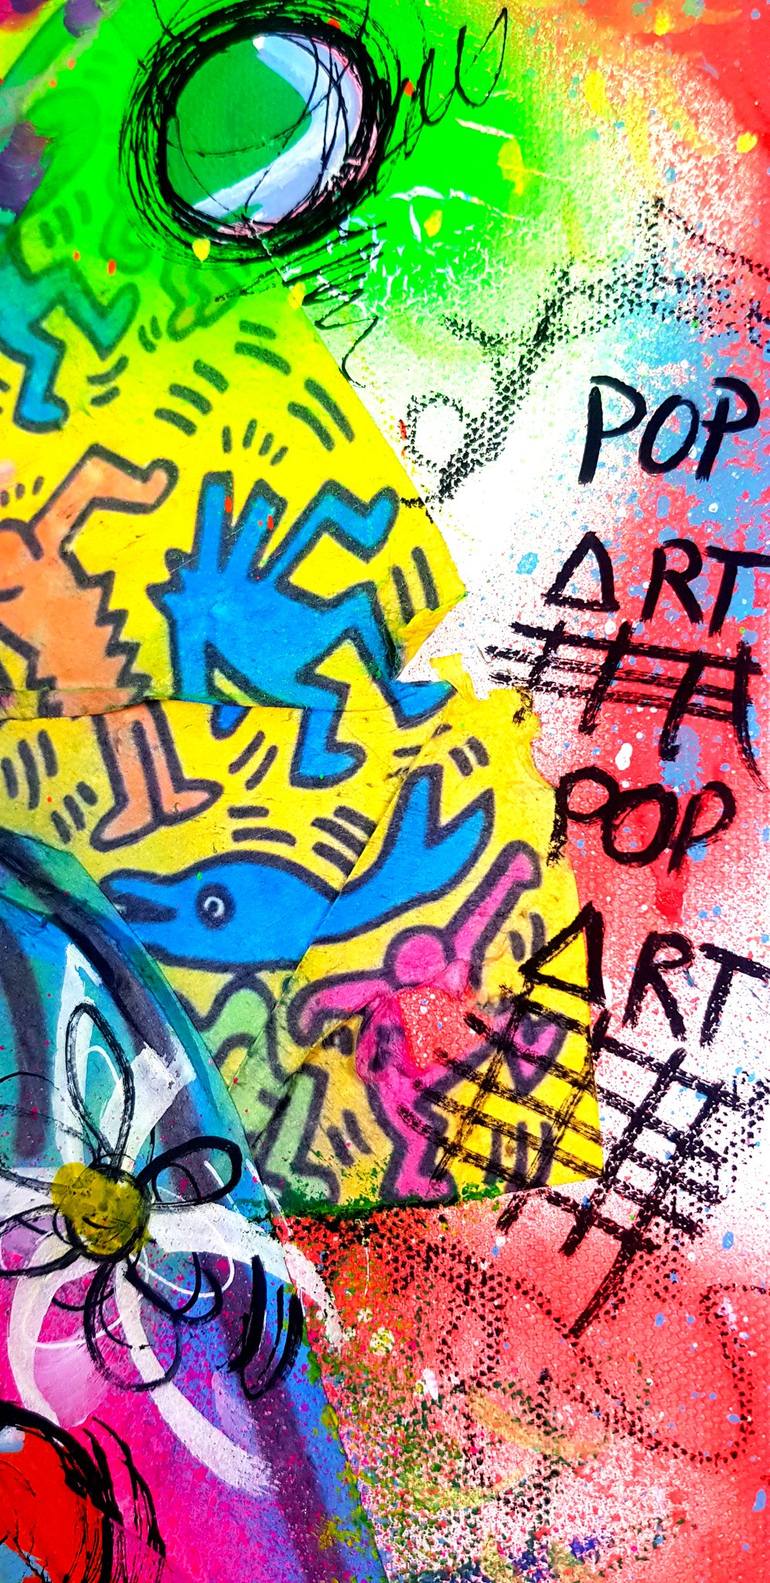 Original Street Art Pop Culture/Celebrity Painting by Priscilla Vettese